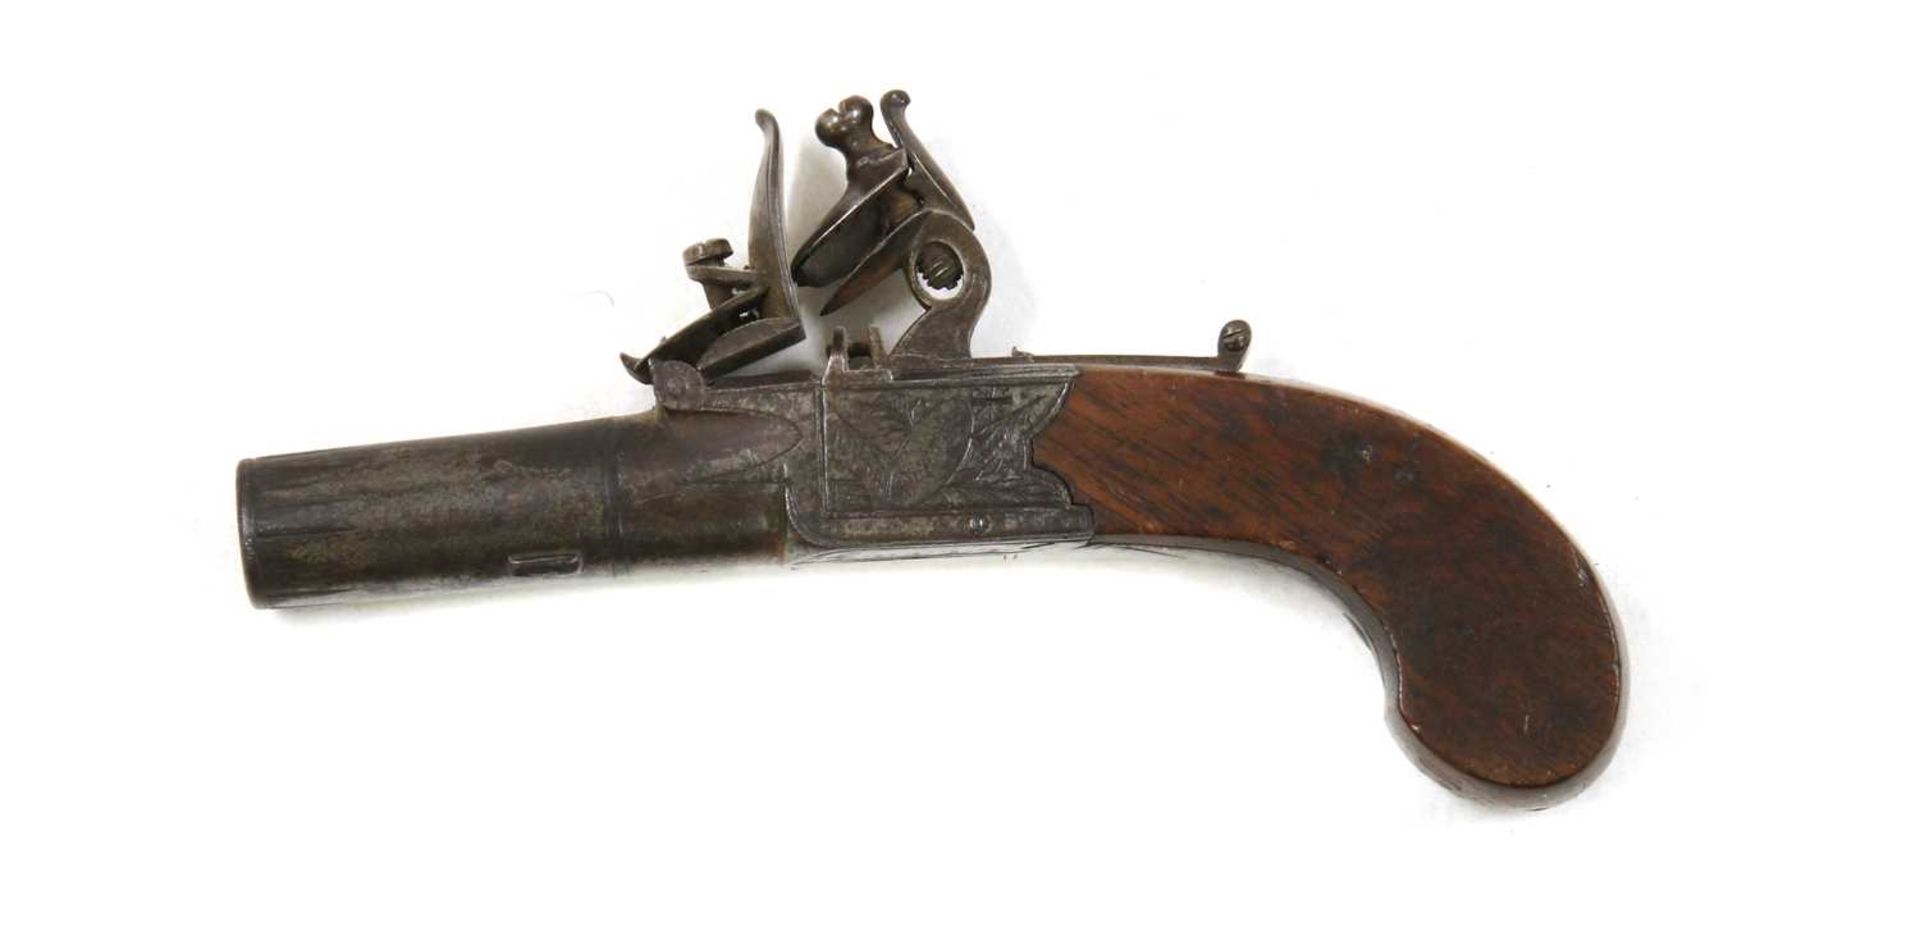 A flintlock cannon barrel pocket pistol,